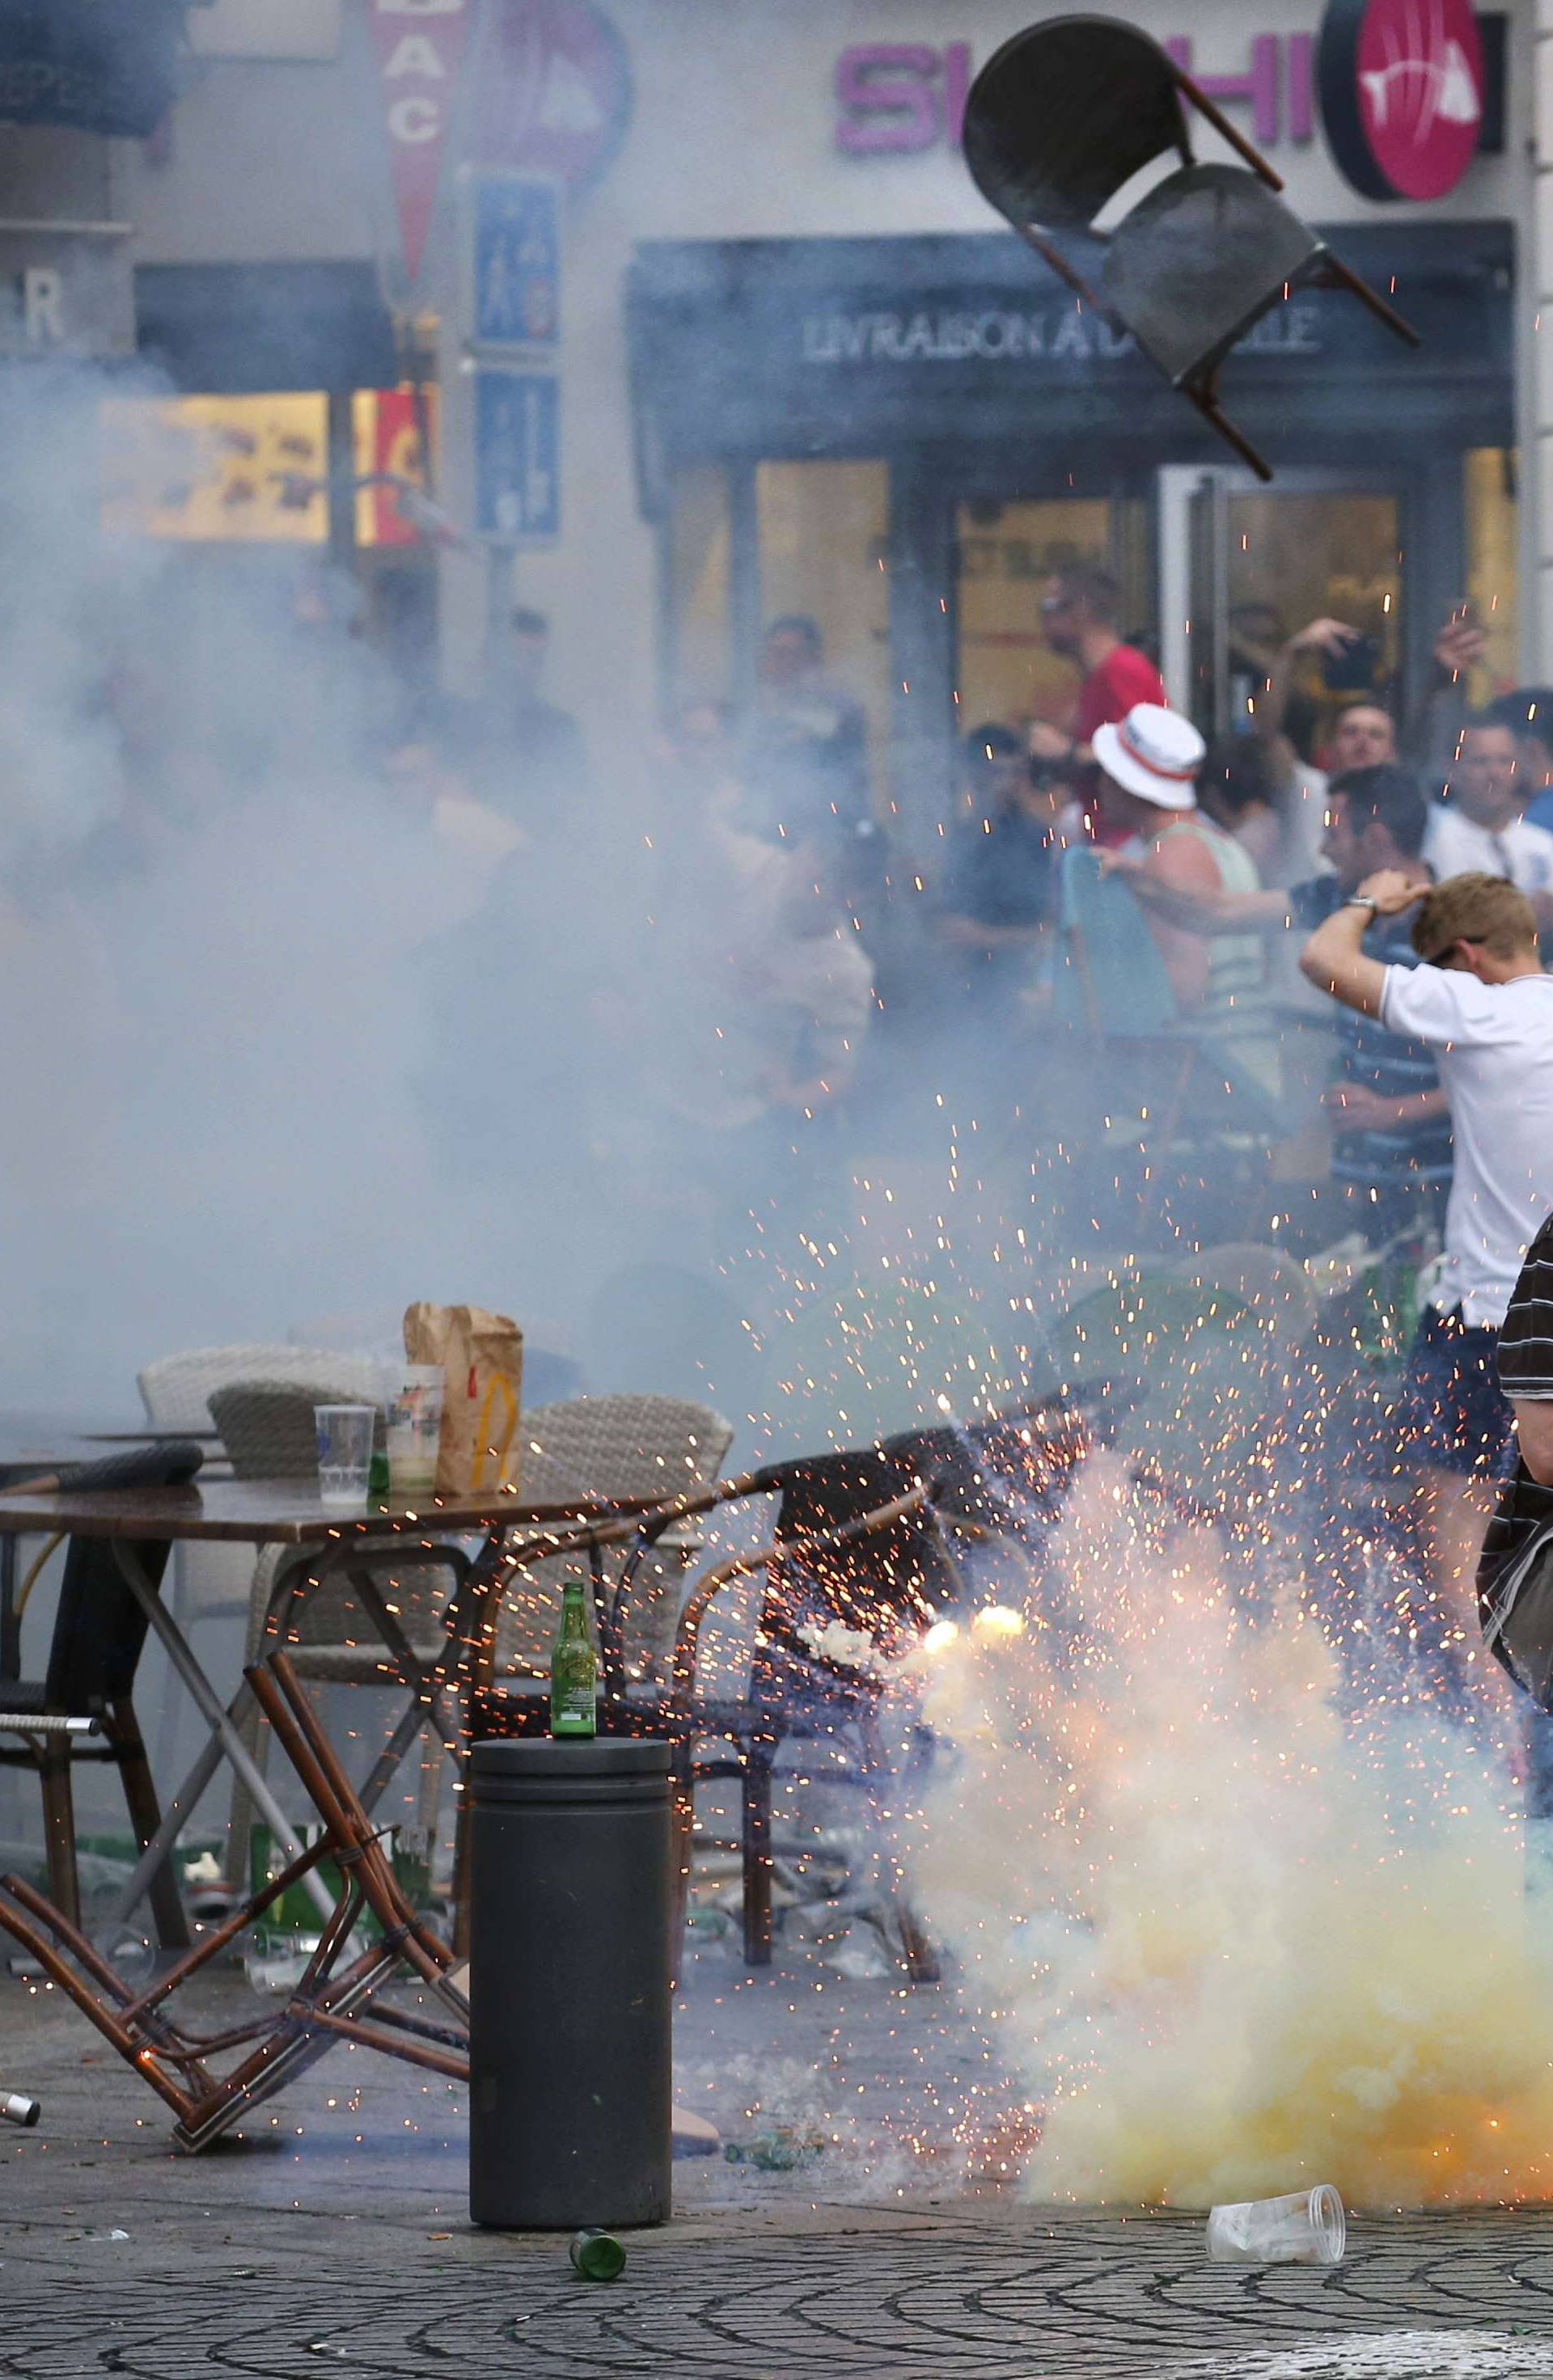 A teargas grenade explodes near an England fan ahead of England's EURO 2016 match in Marseille